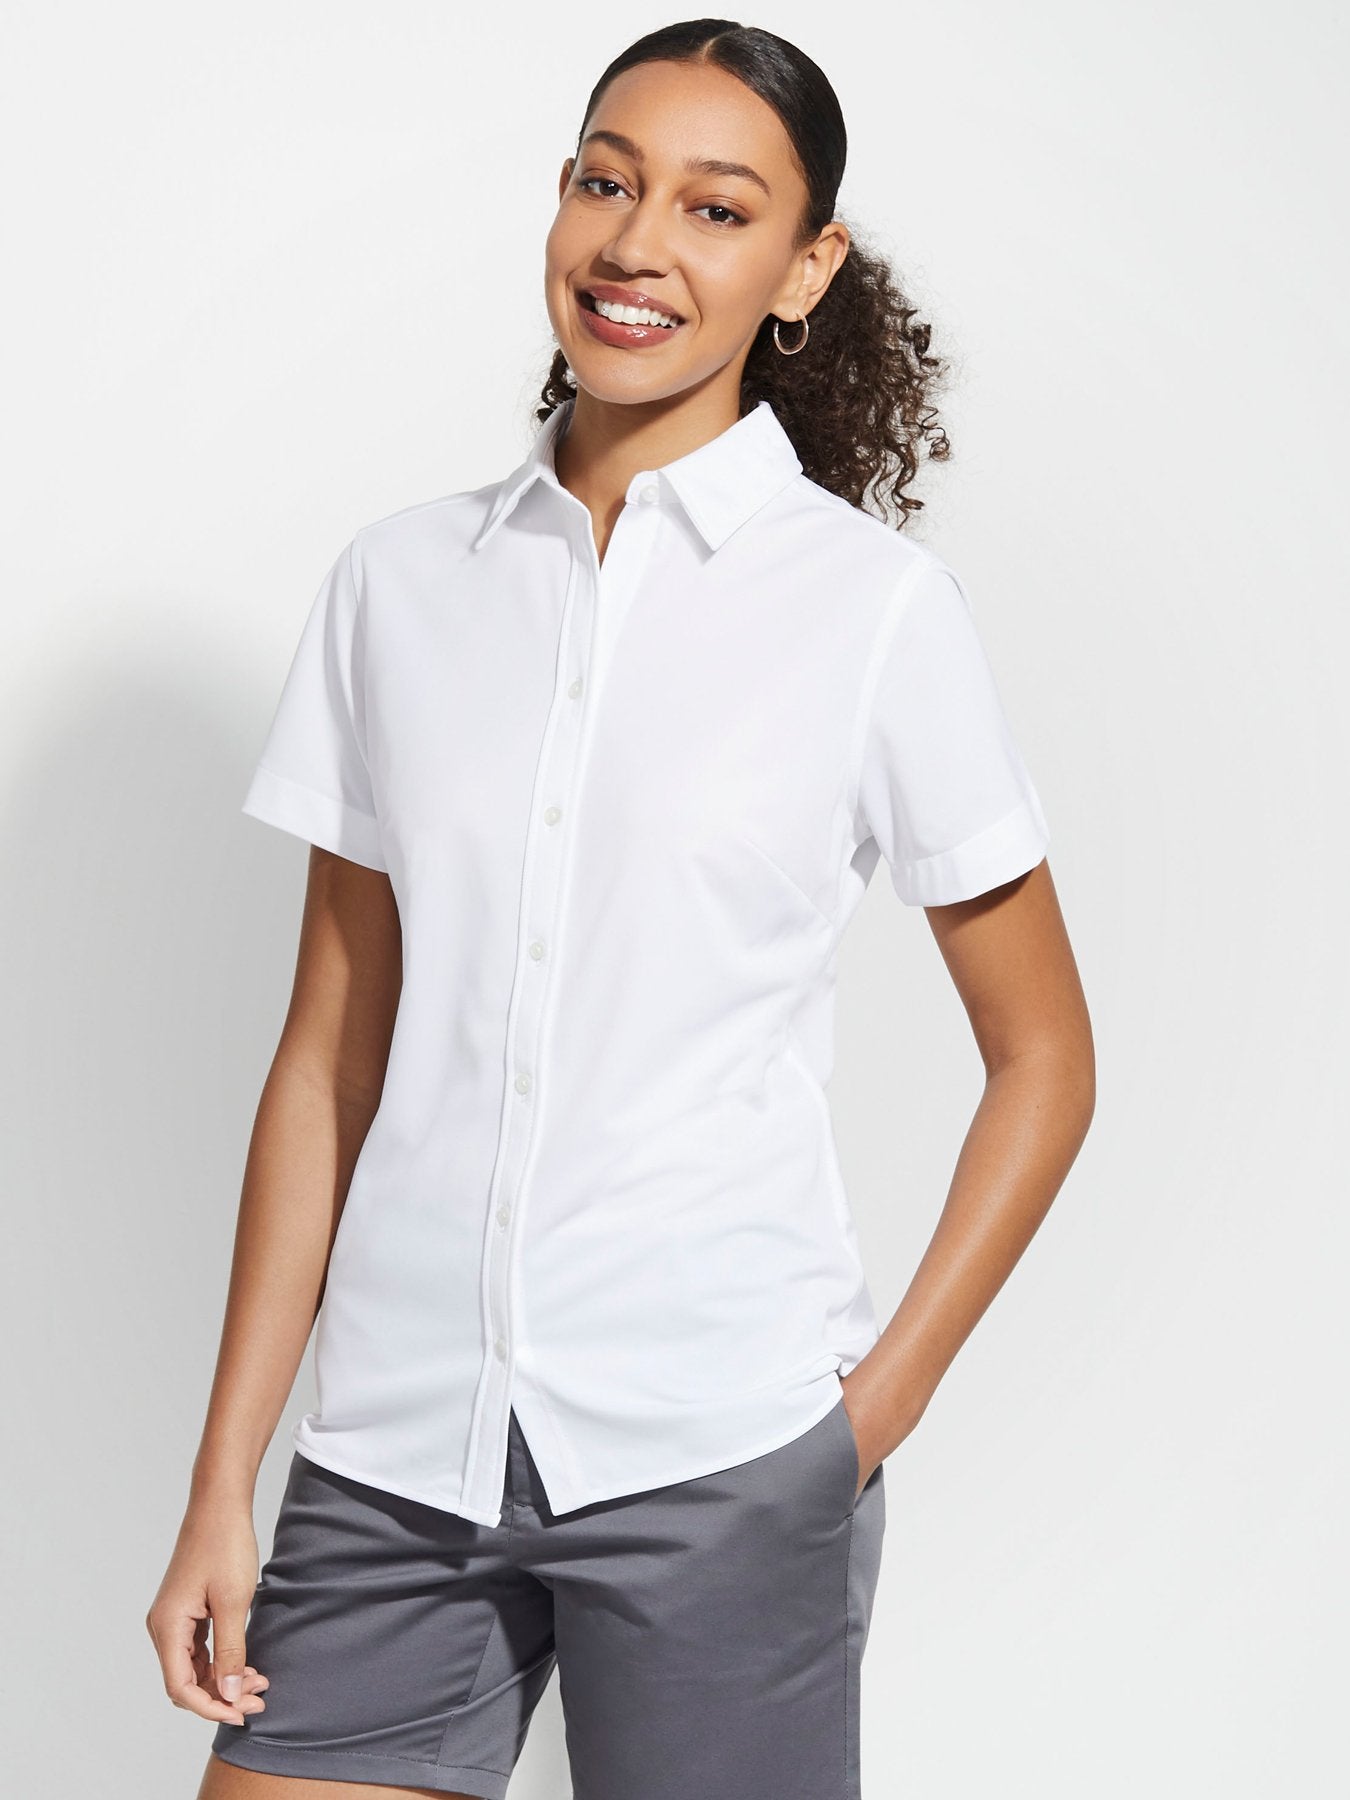 Ladies' X1 Performance Knit Shirt Short Sleeve - White – ICO Uniforms